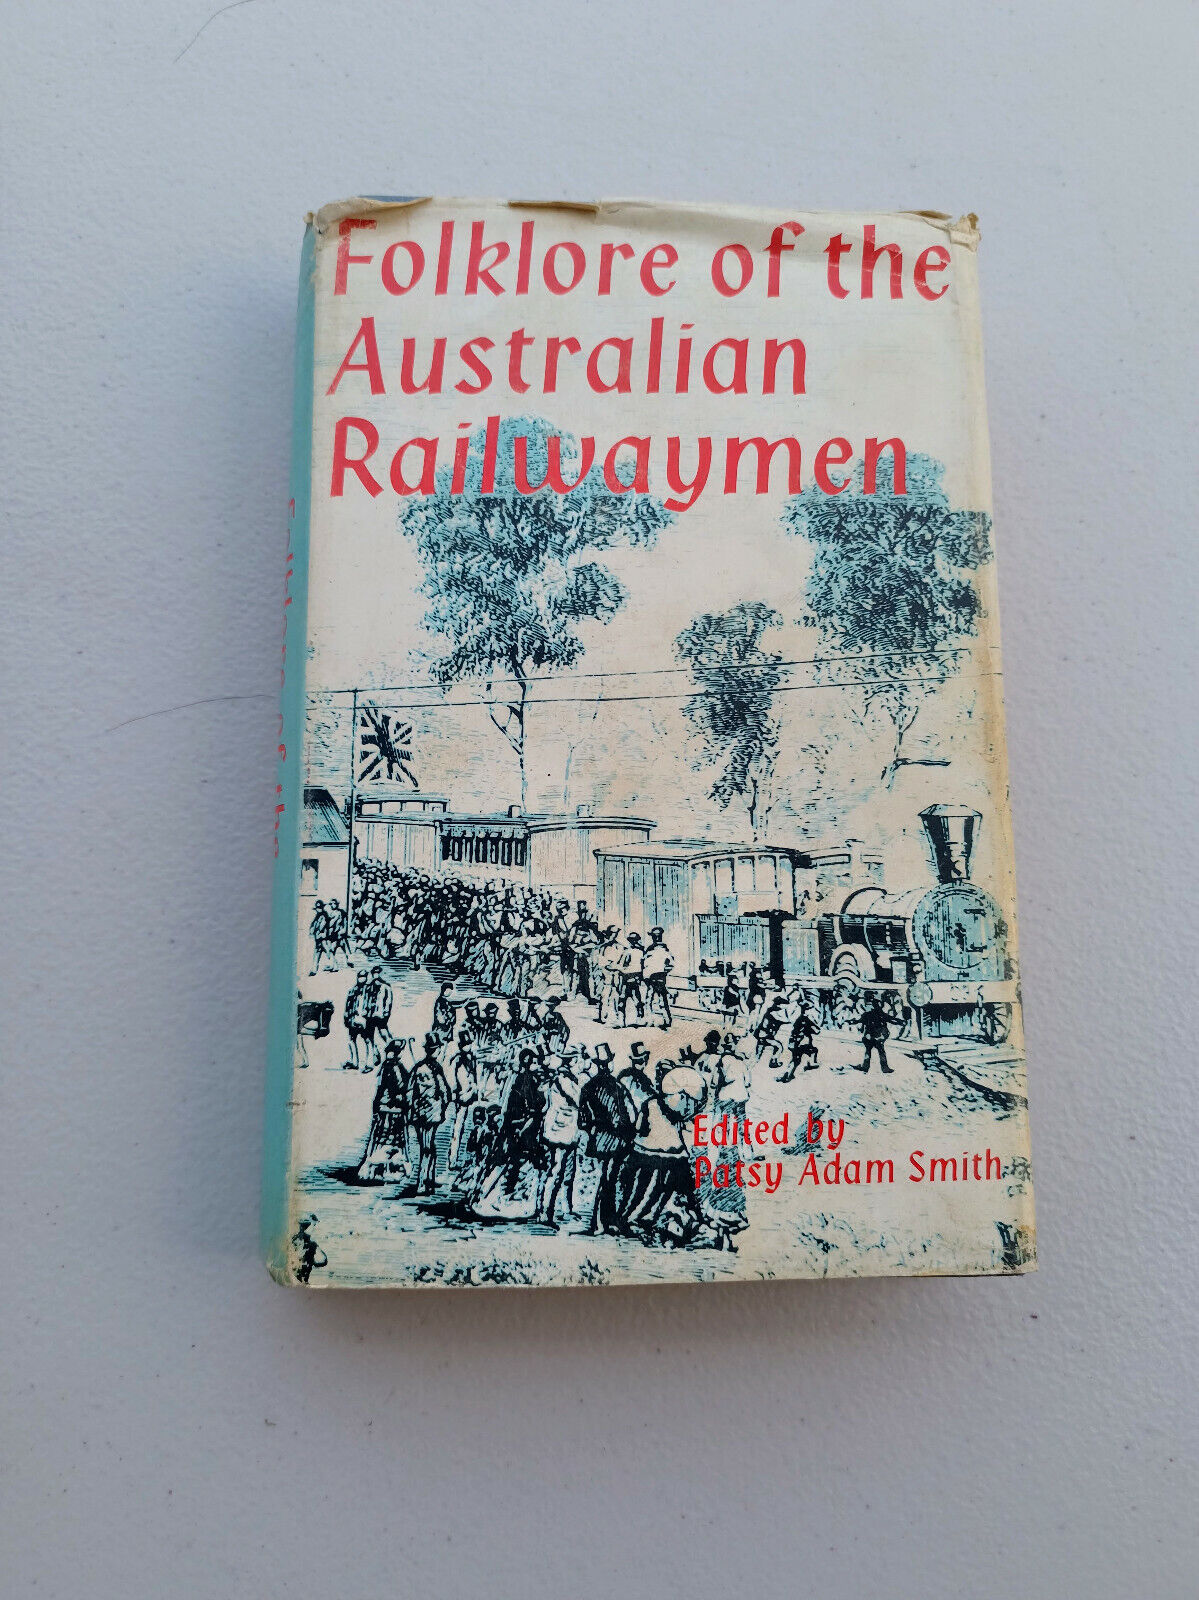 Folklore of the Australian Railwaymen - Patsy Adam Smith 1969